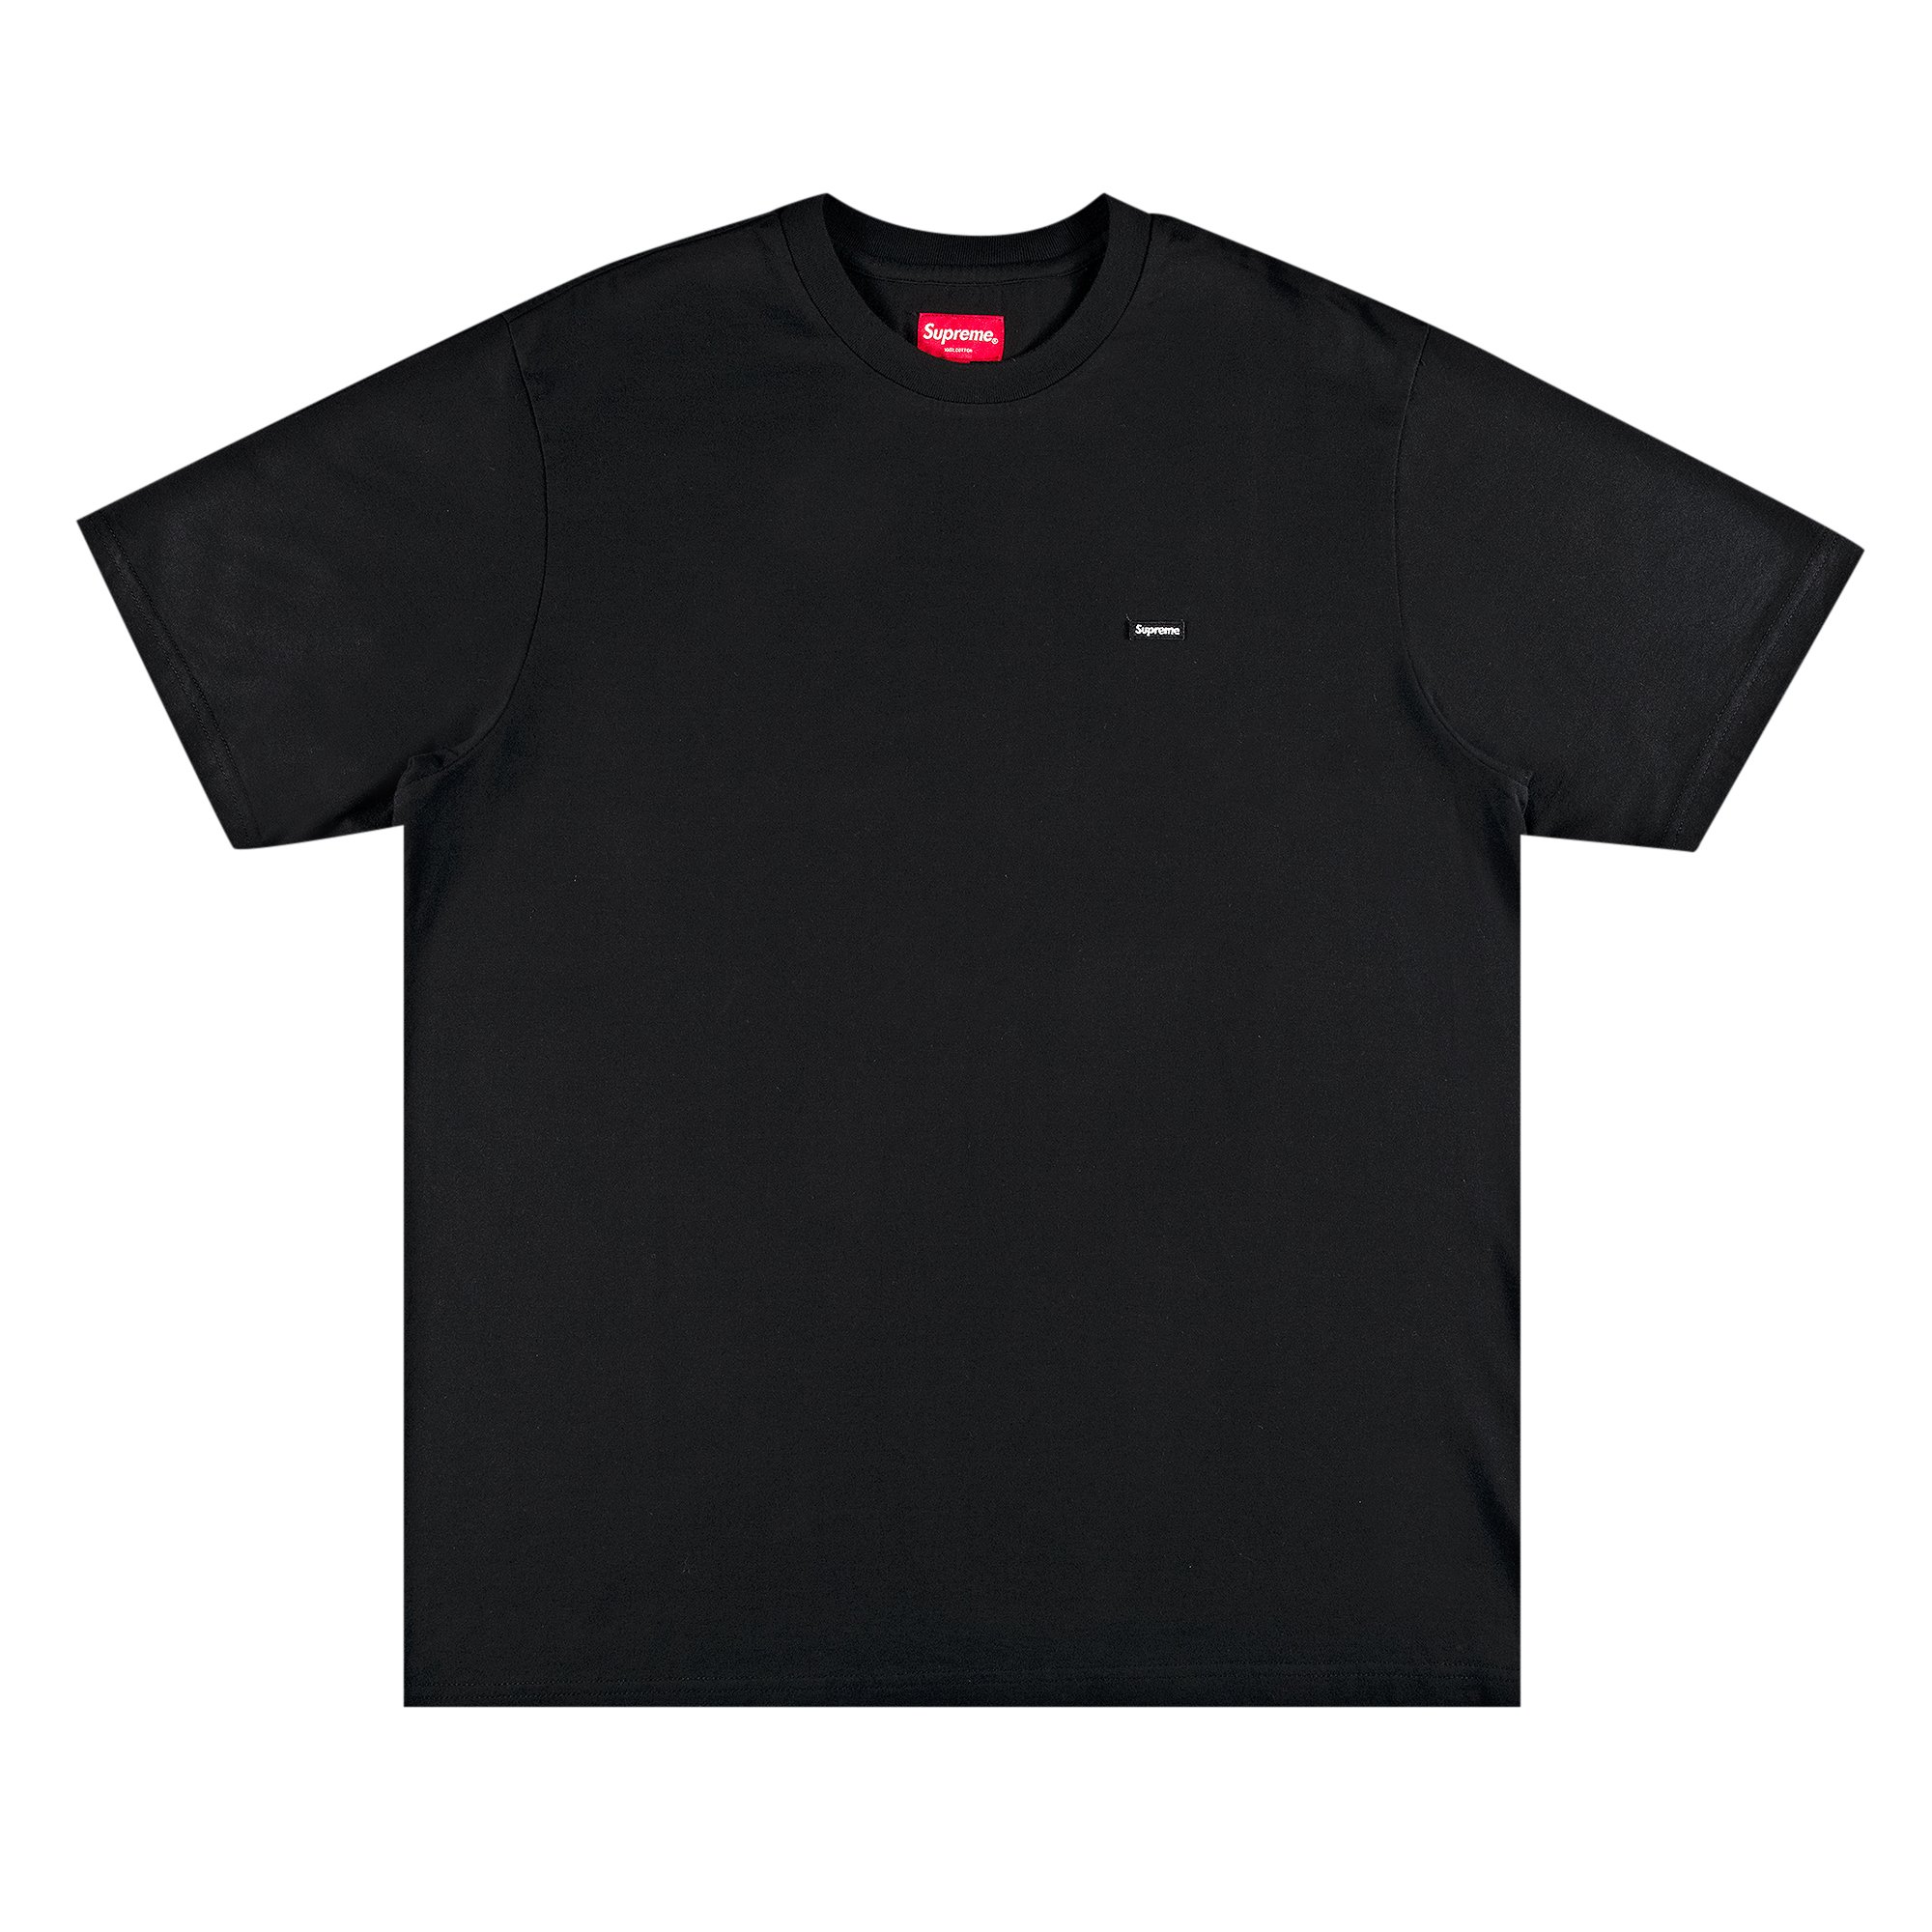 Supreme Small Box Tee Black Floral Tシャツ/カットソー(半袖/袖なし) 新作からSALEアイテム等お得な商品満載